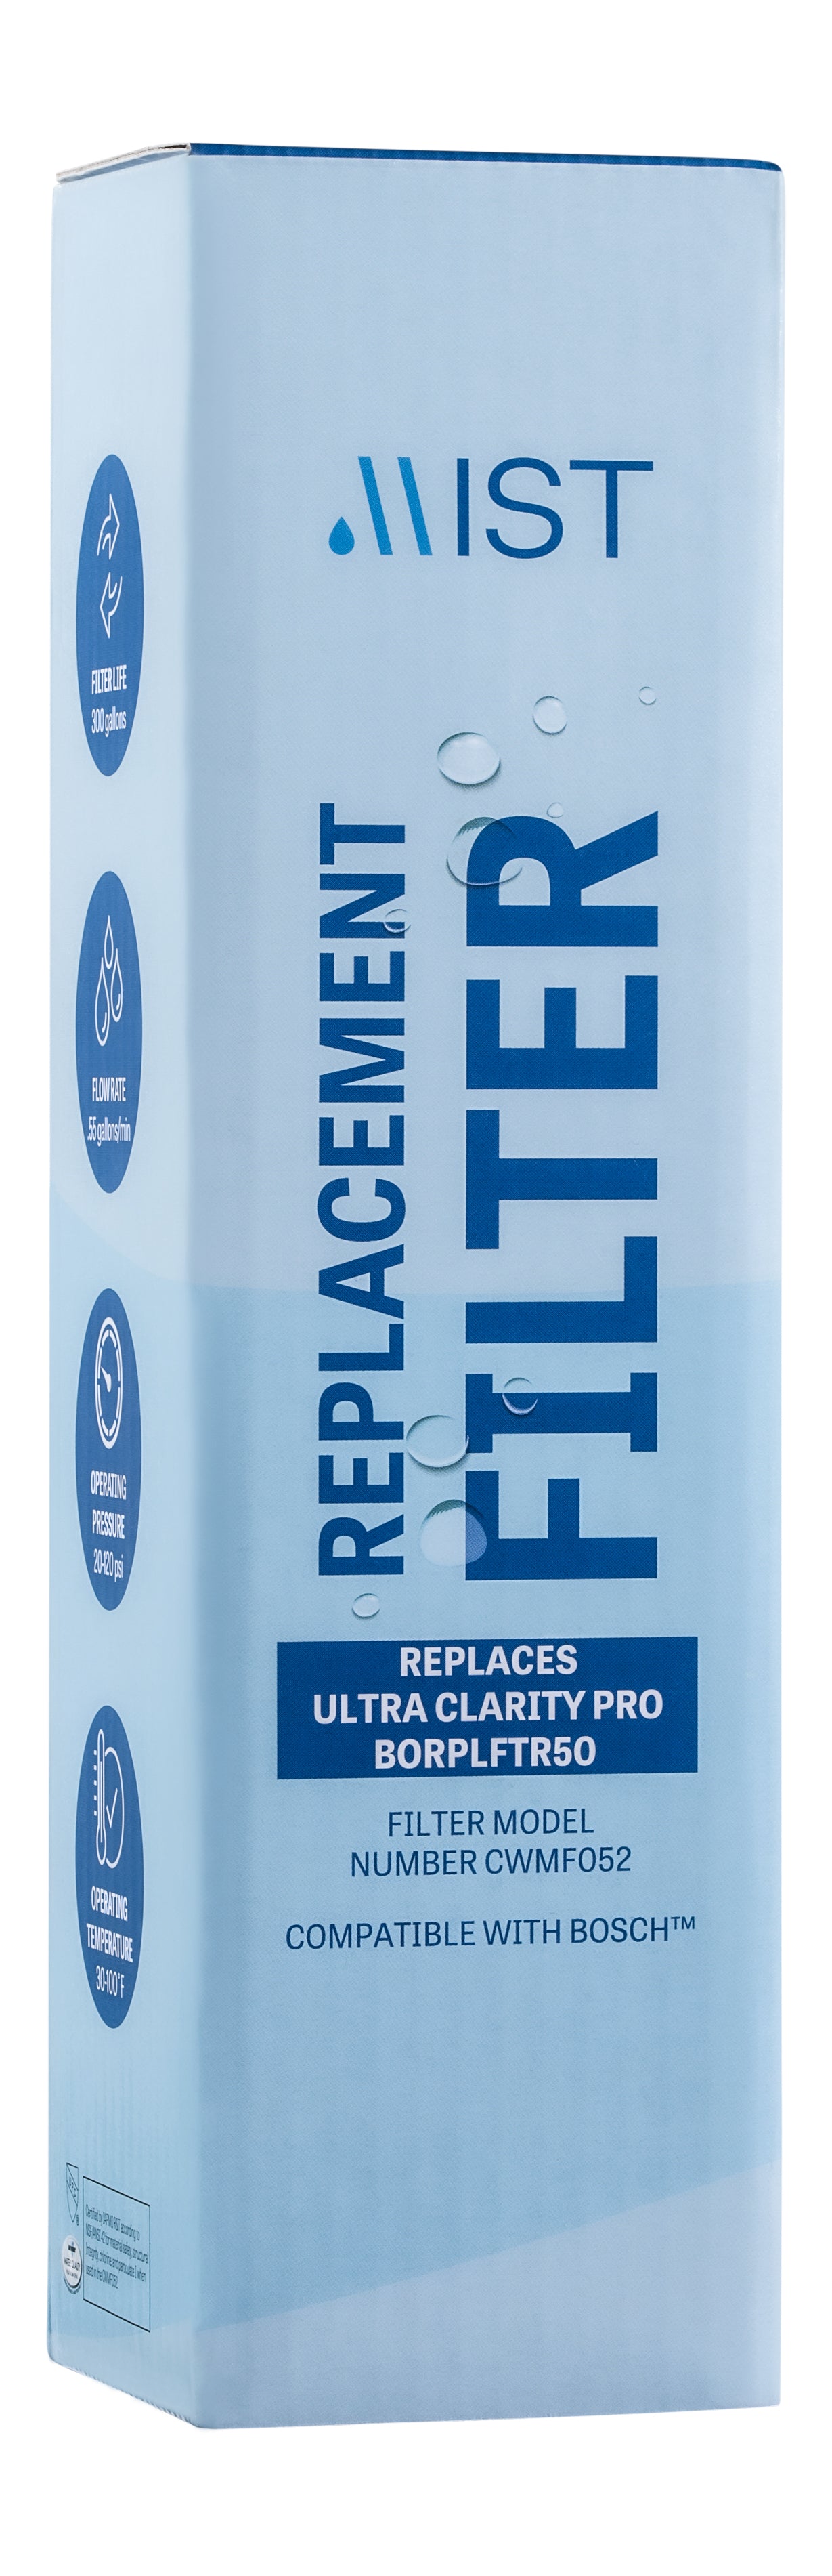 Bosch Ultra Clarity Pro BORPLFTR50 Refrigerator Water Filter